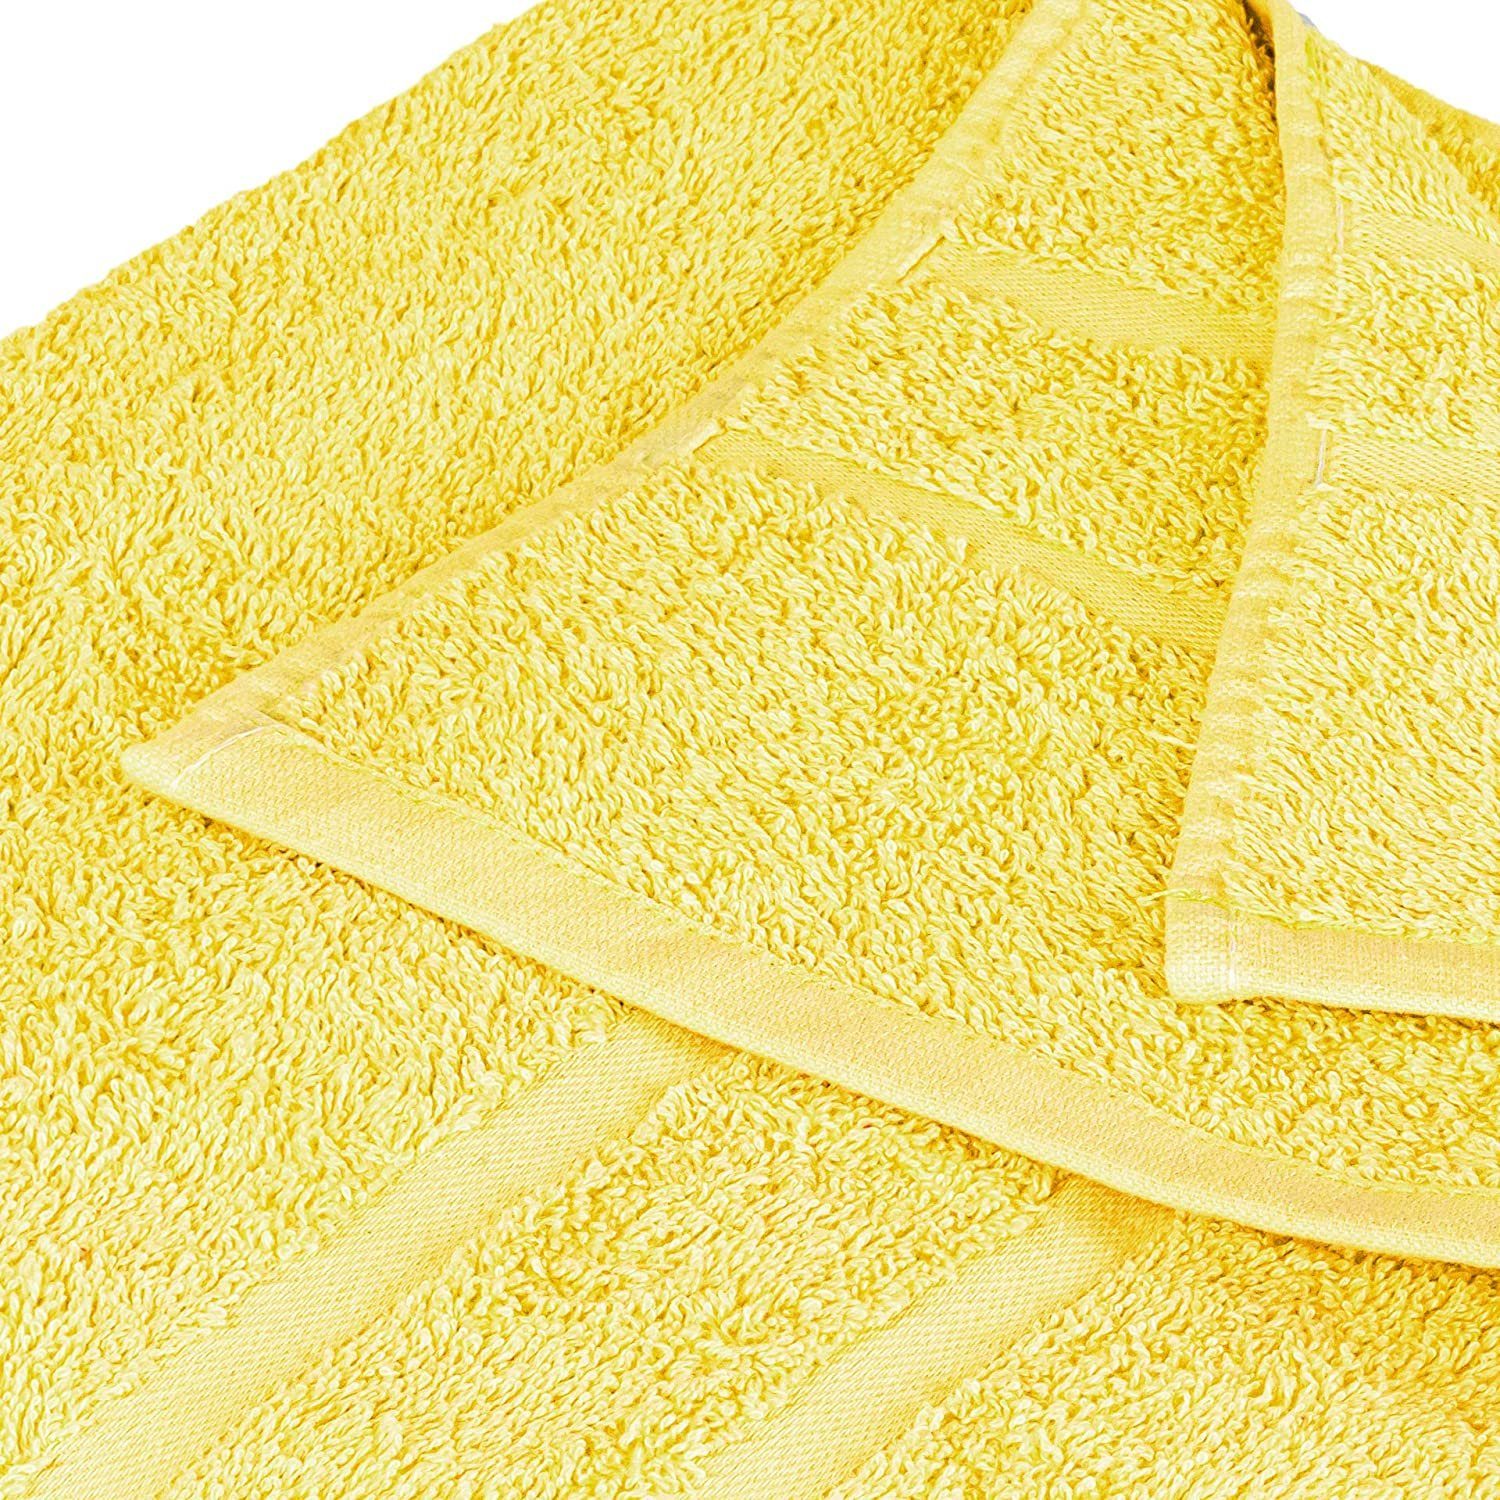 StickandShine Handtuch Handtücher Badetücher Saunatücher Duschtücher GSM Gästehandtücher zur 100% Wahl Baumwolle Gelb in 500